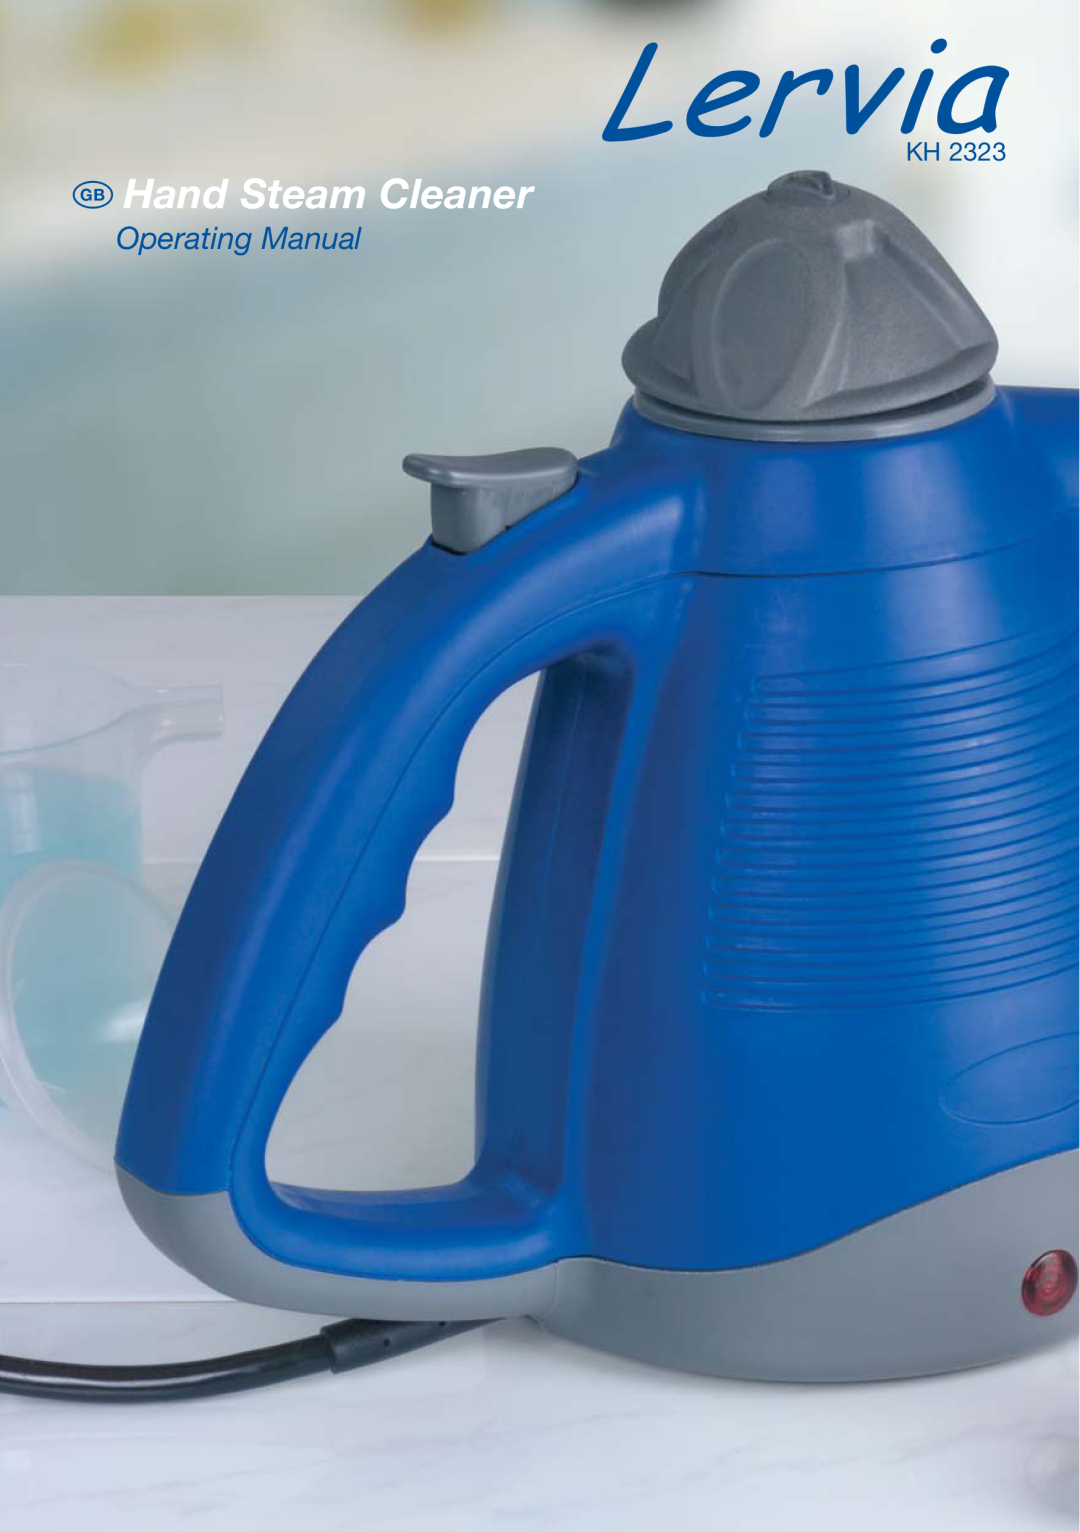 Kompernass KH 2323 manual  Hand Steam Cleaner, Operating Manual 